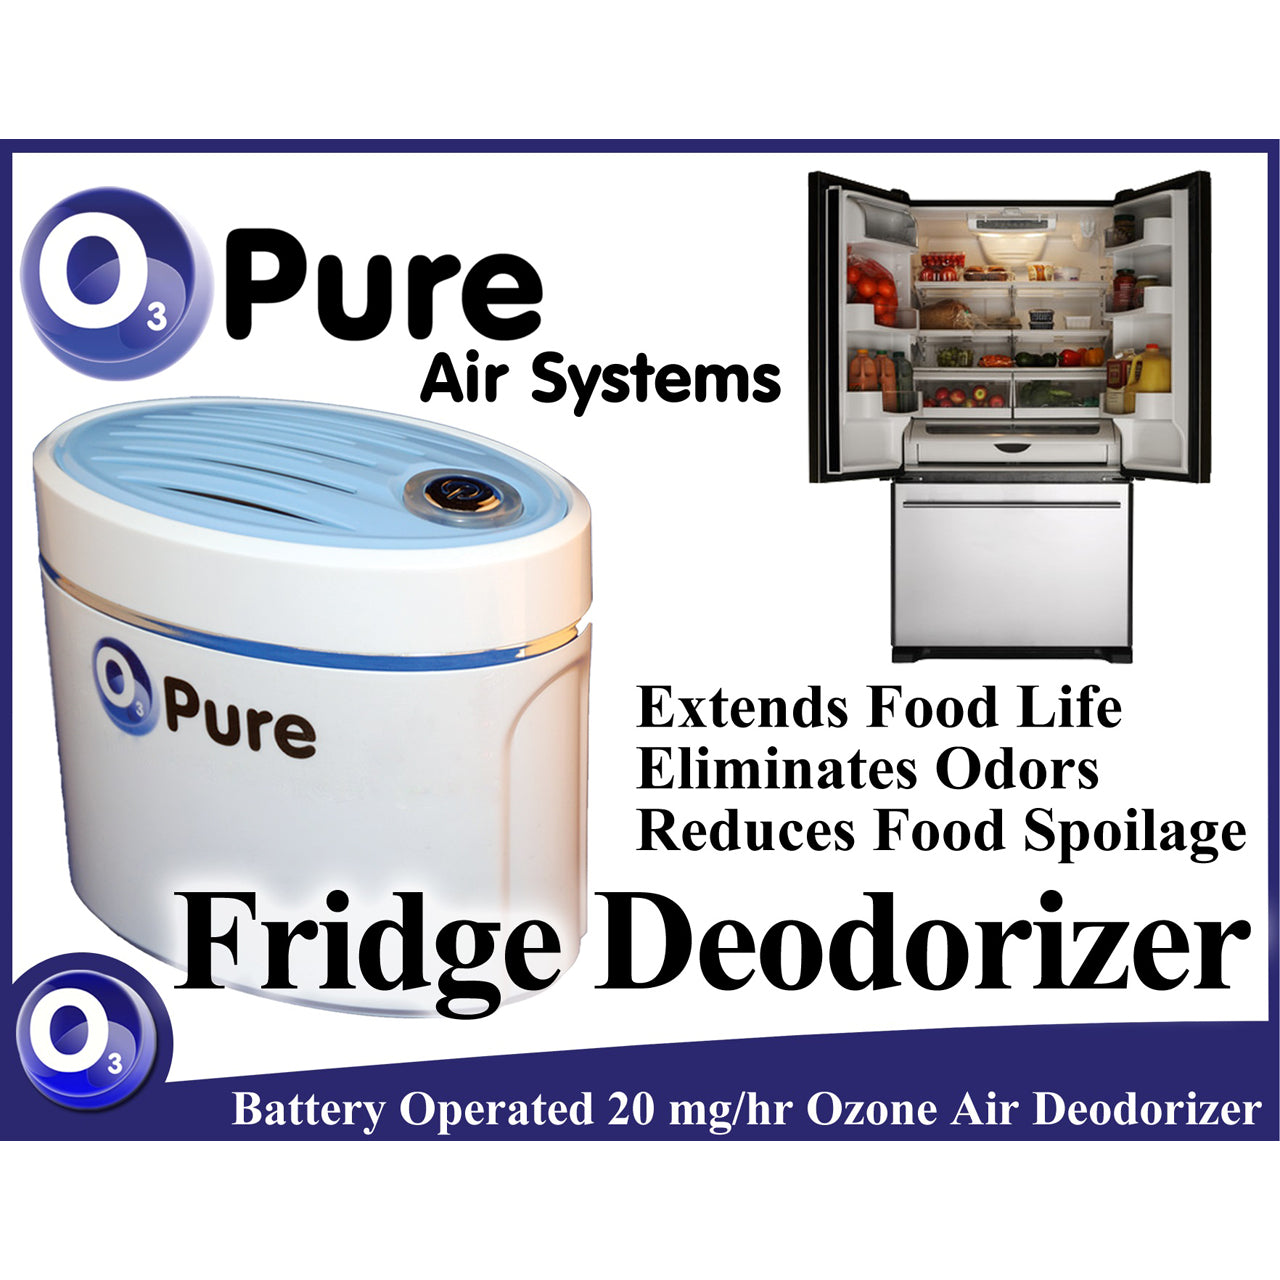 O3 PURE Fridge Deodorizer and Food Preserver